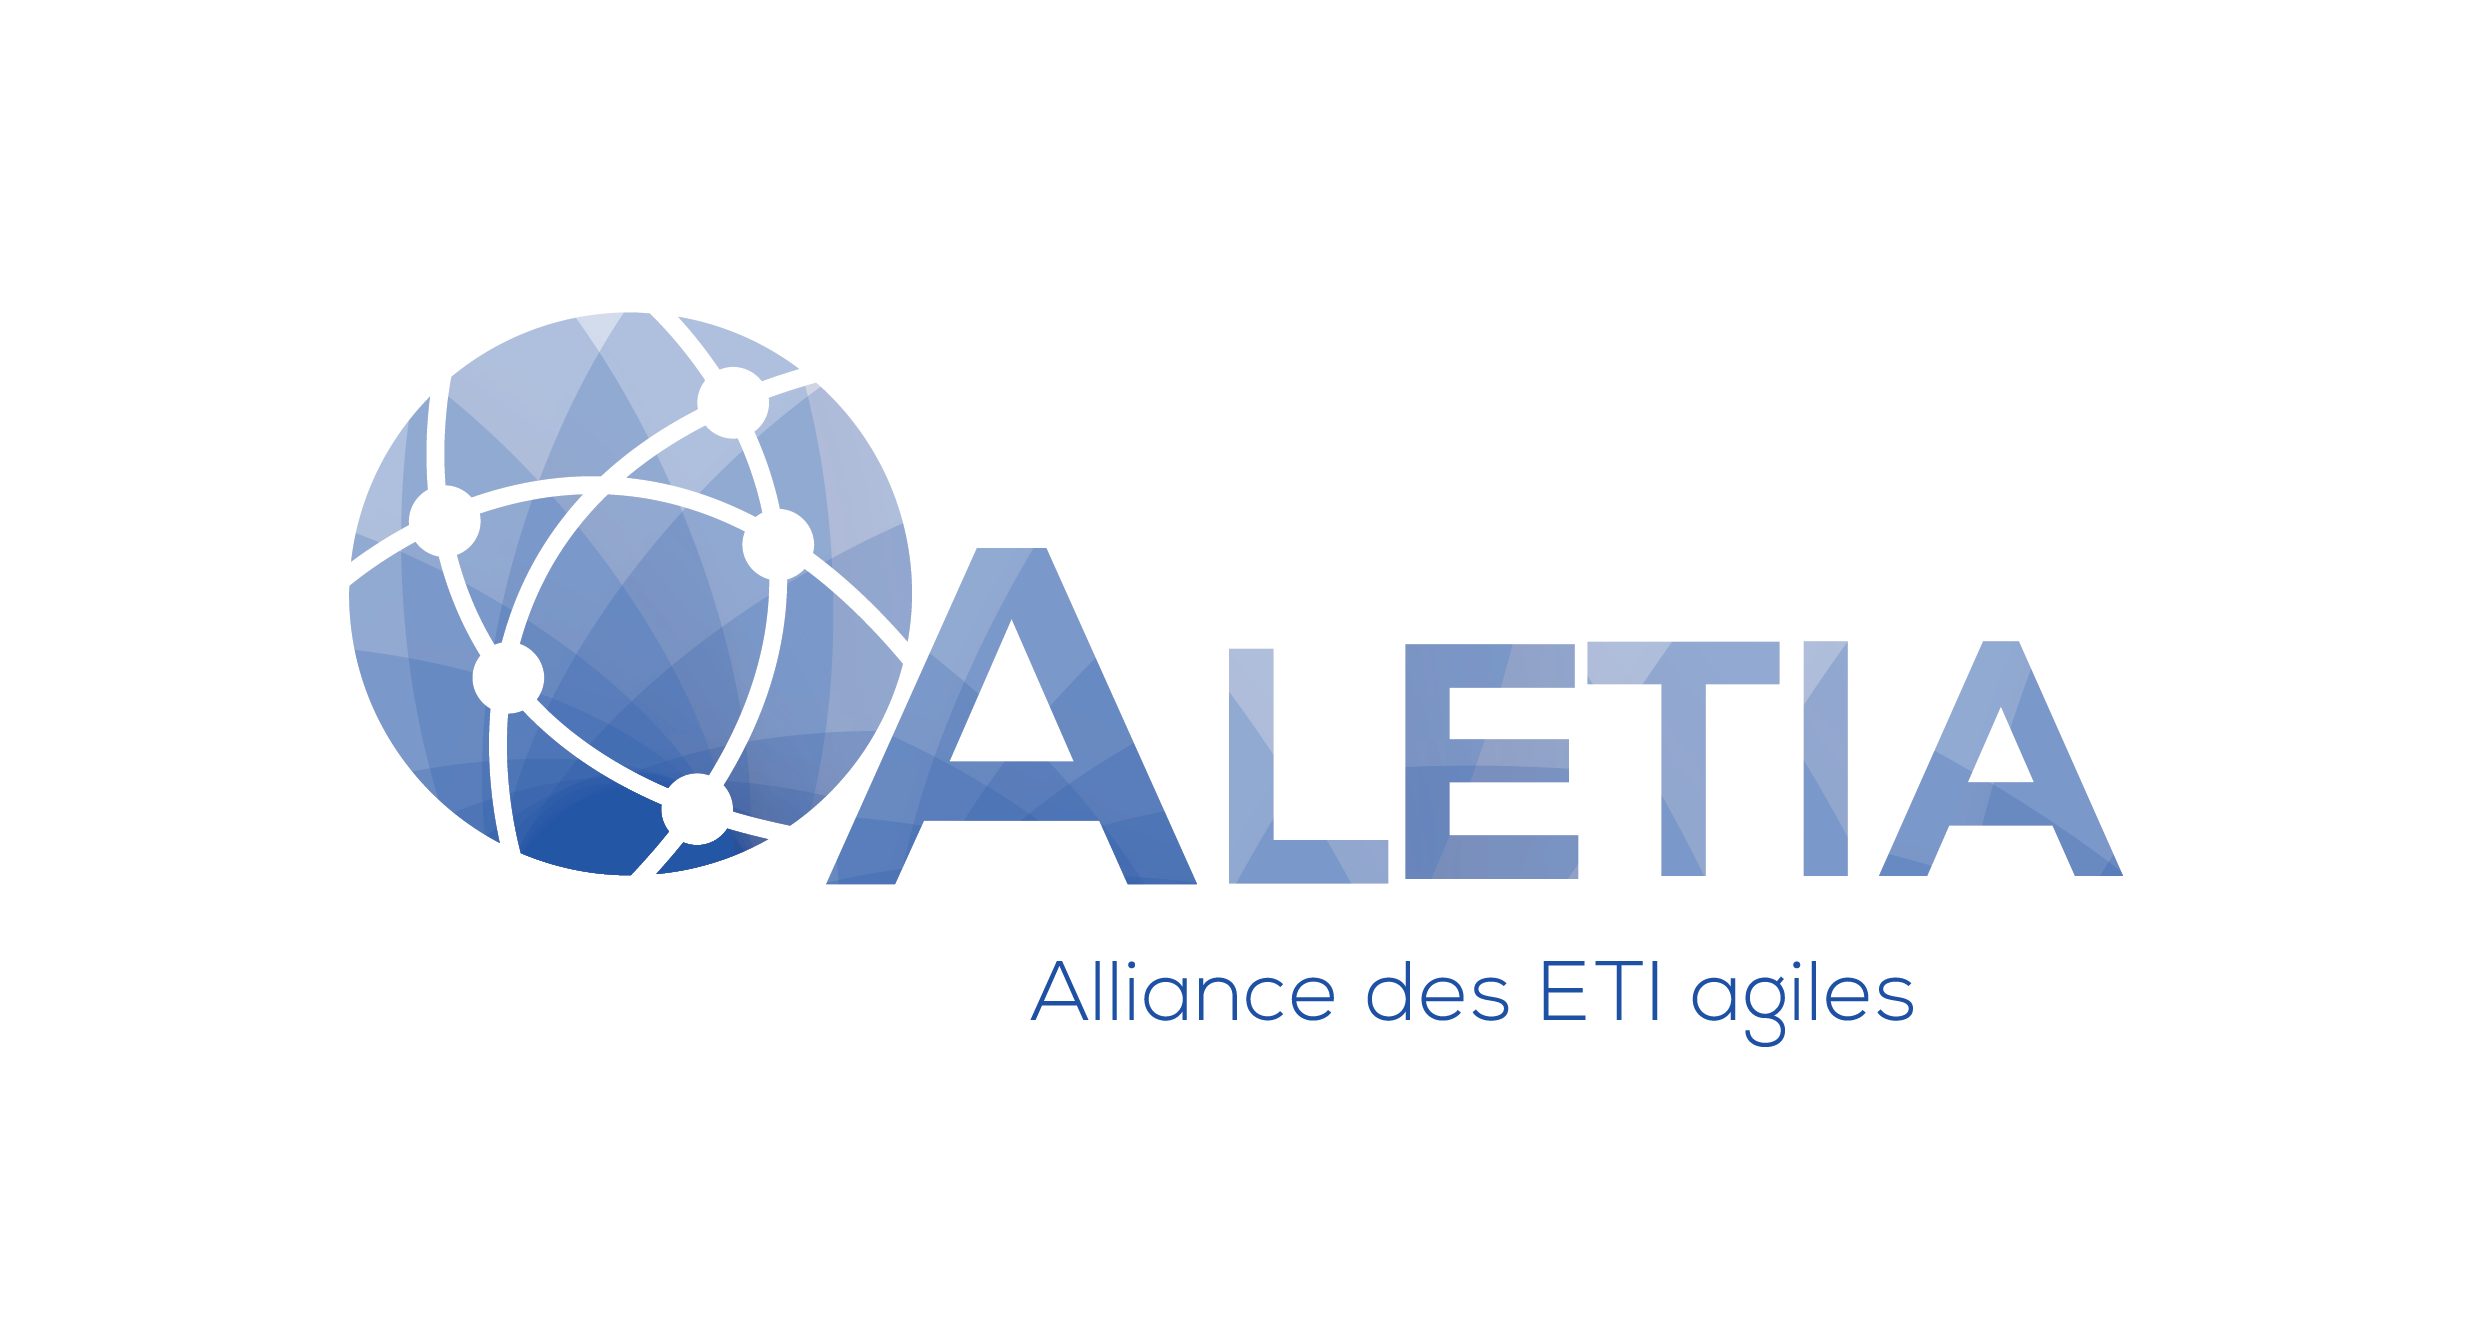 Aletia, l'Alliance des ETI agiles